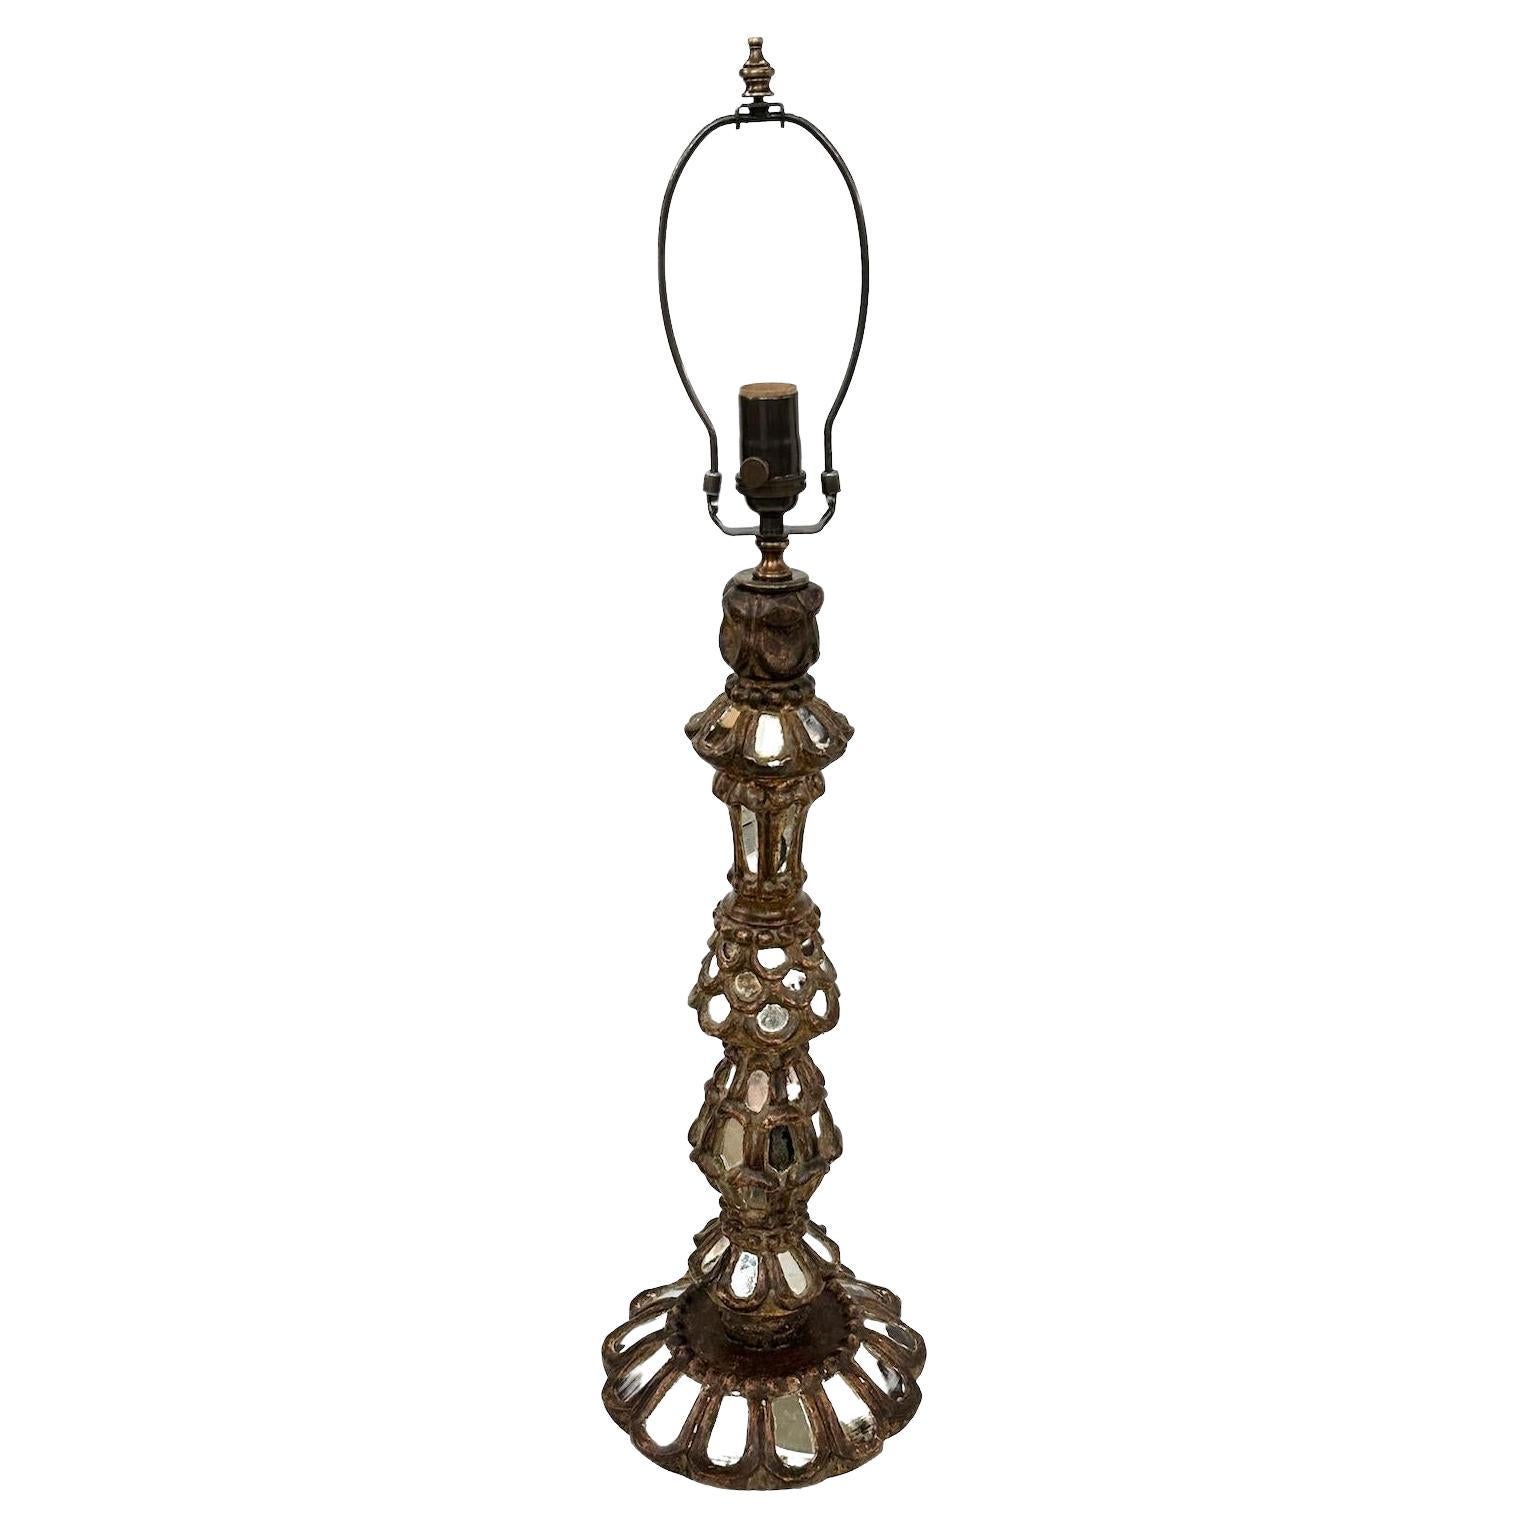 Antique Candlesitck Lamp For Sale